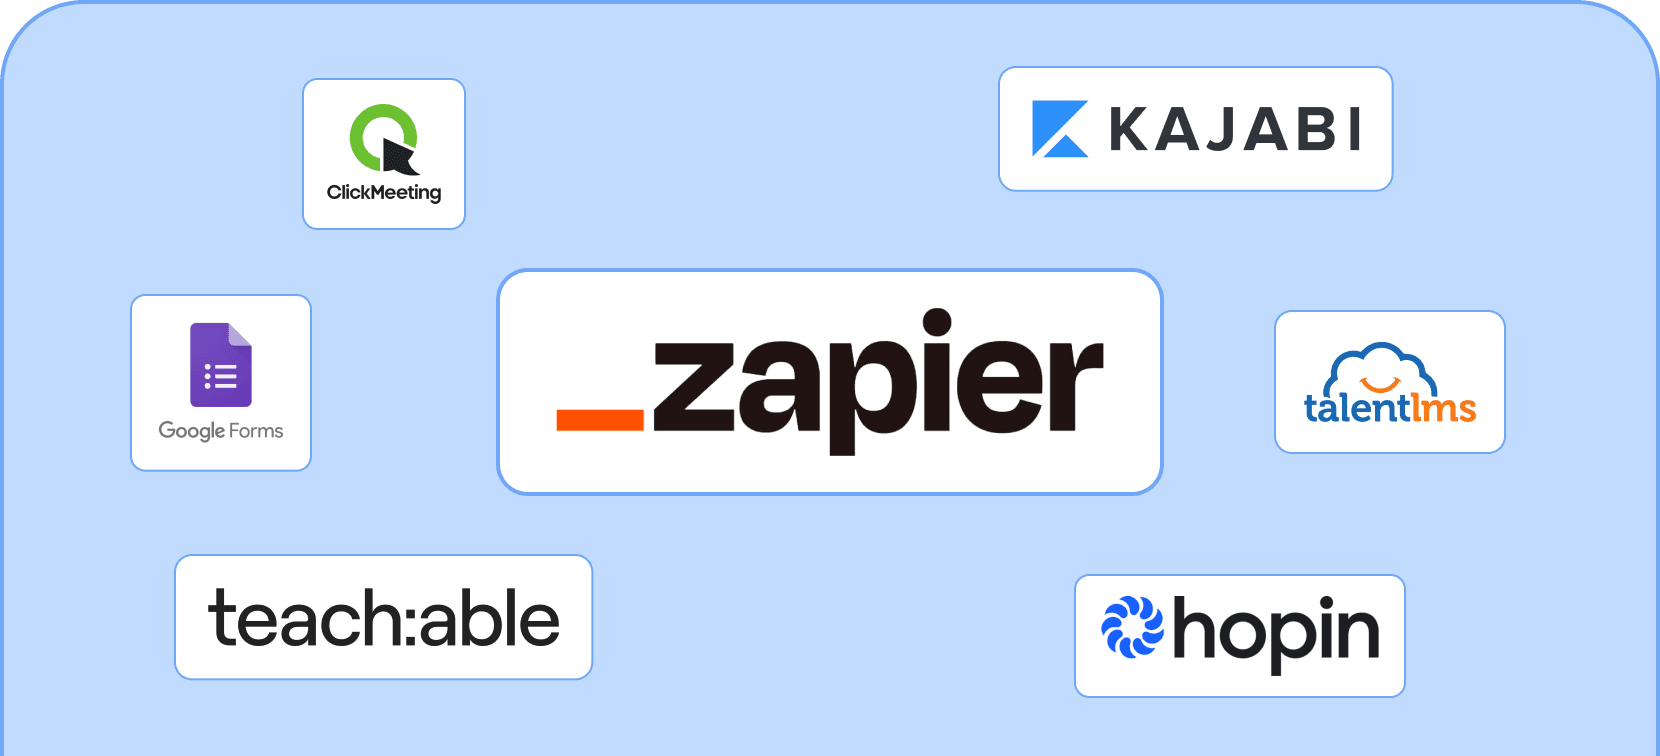 Integrate with zapier - Certifier features